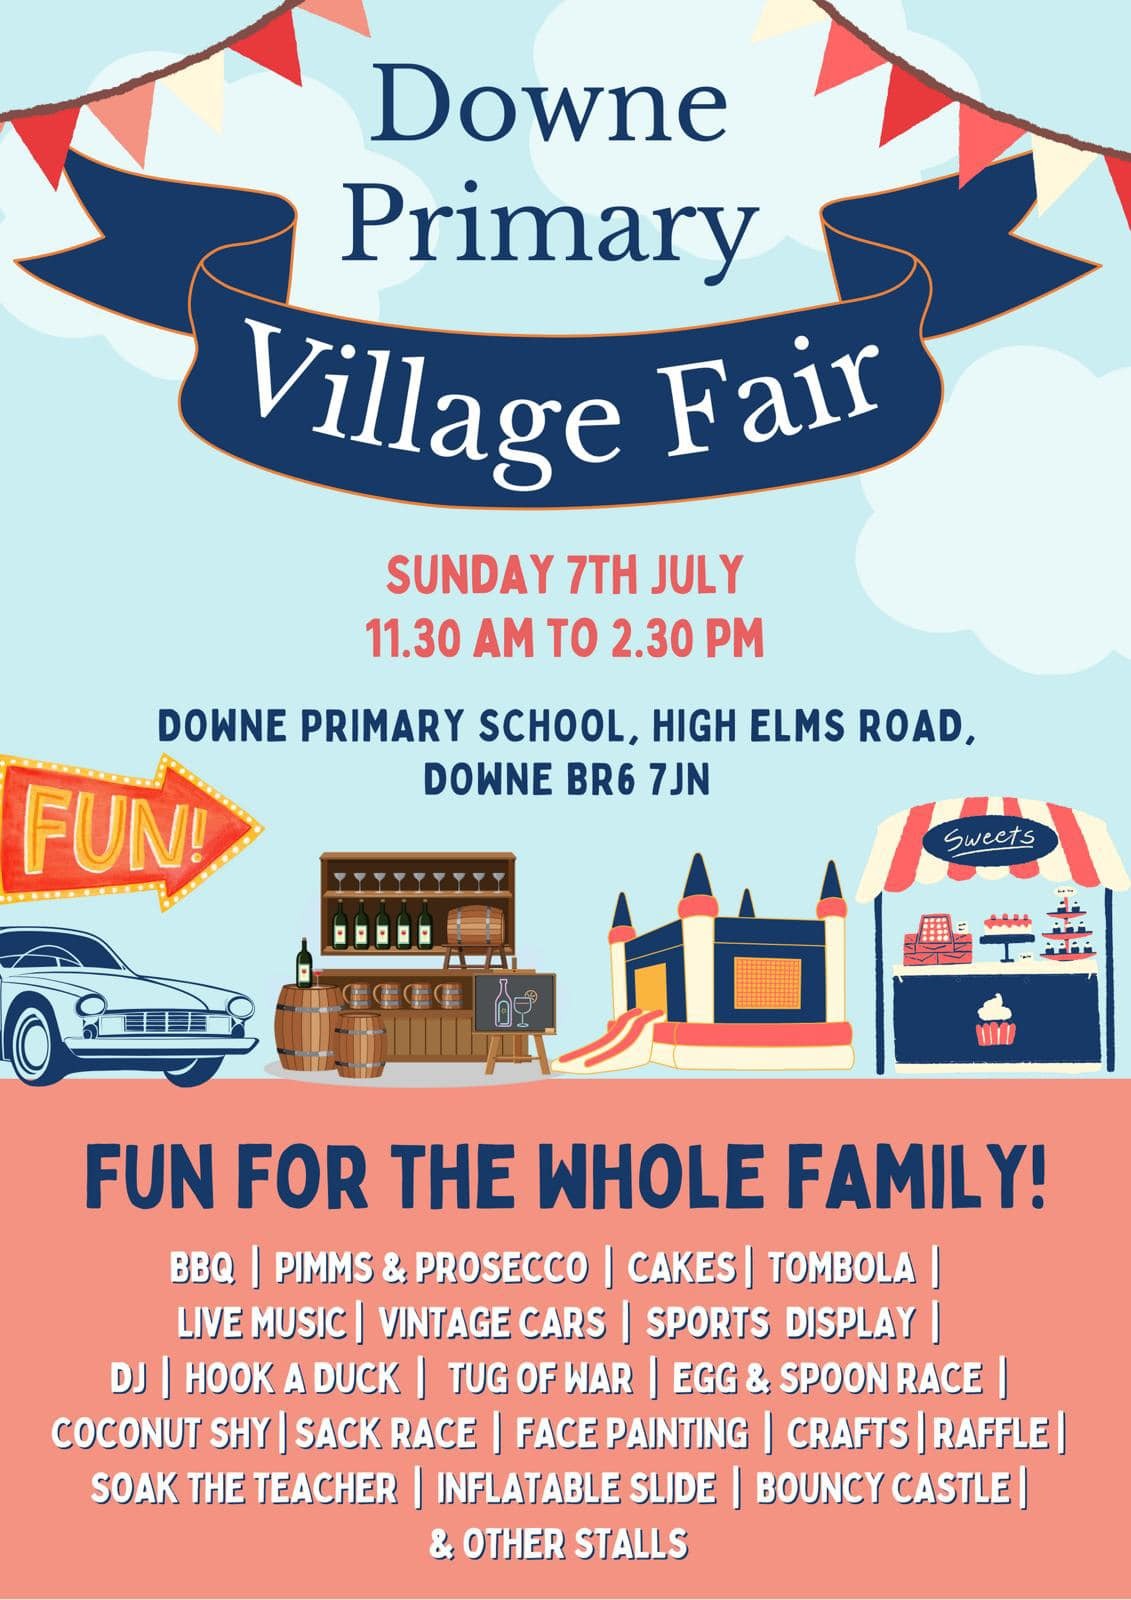 Downe Primary Village Fair